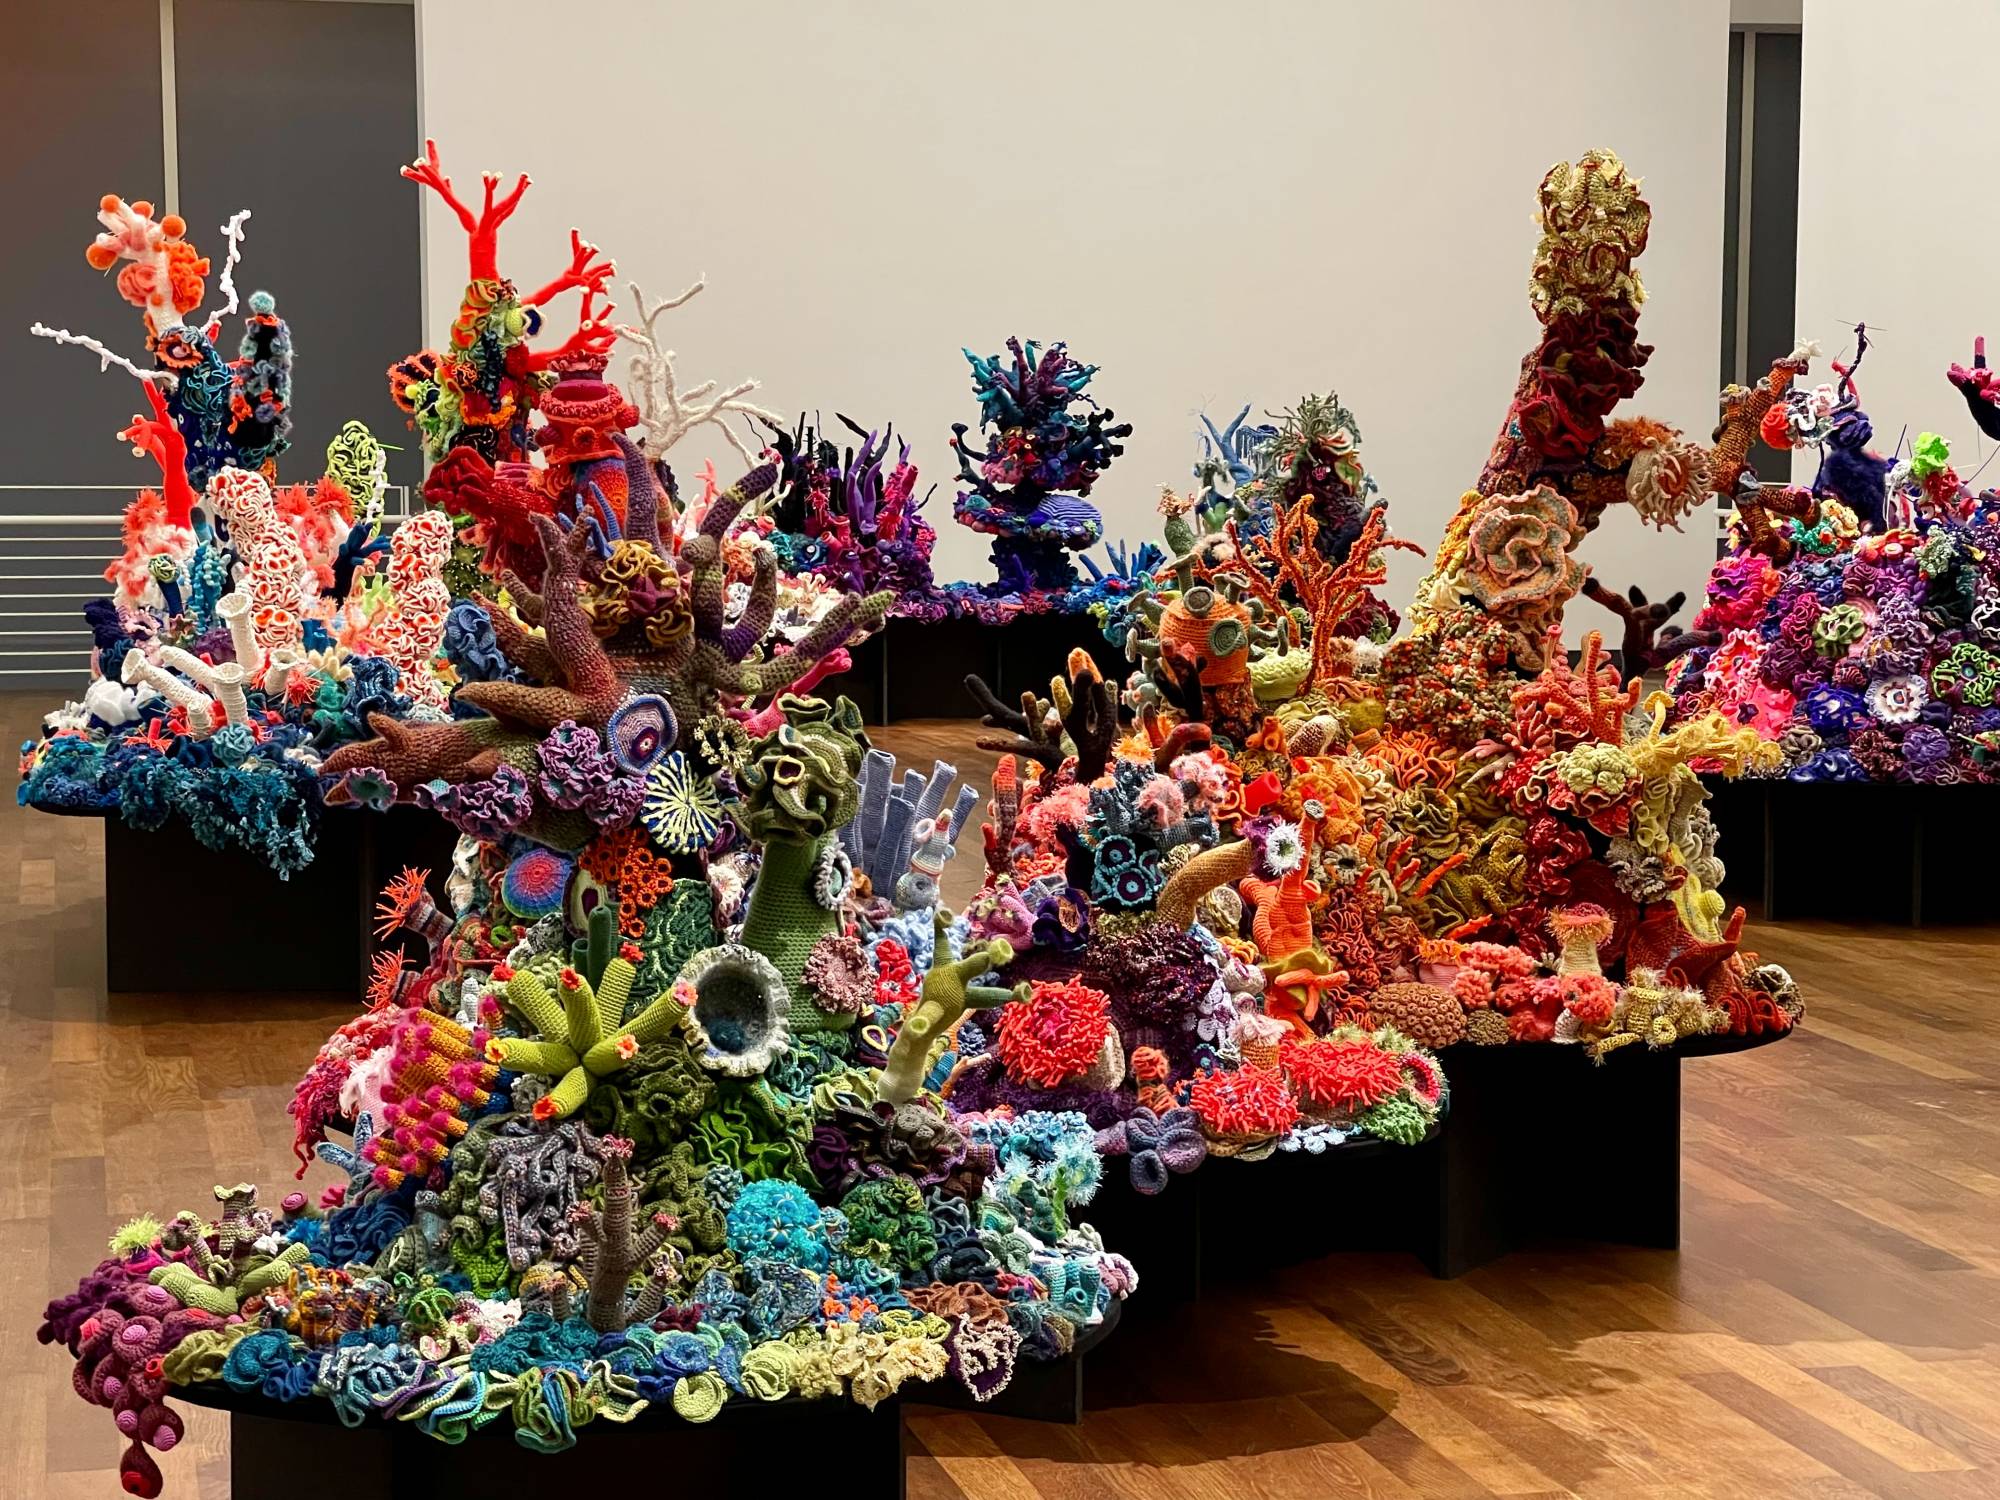 crochet coral islands at Museum Frieder Burda